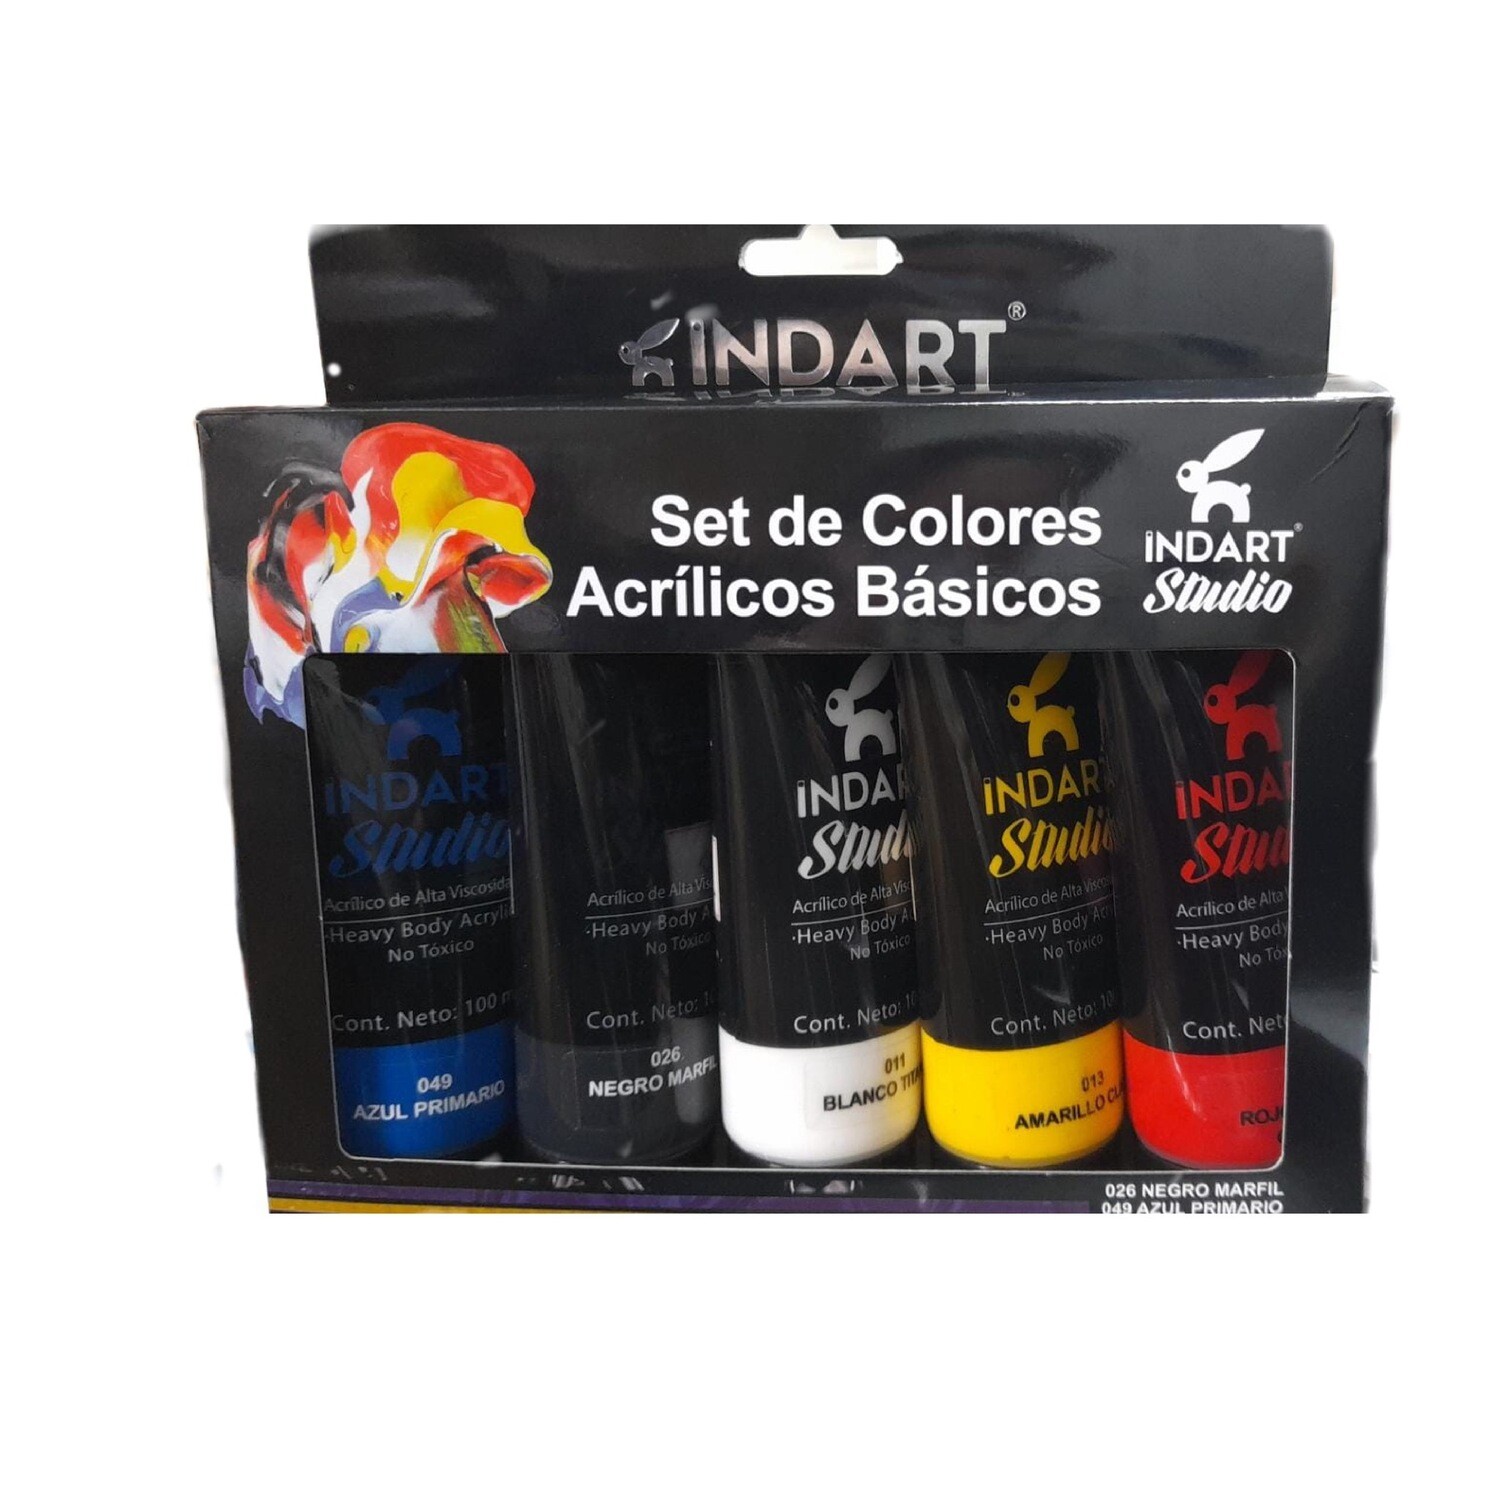 Set de colores Acrílicos básicos Indart de 100 ml.